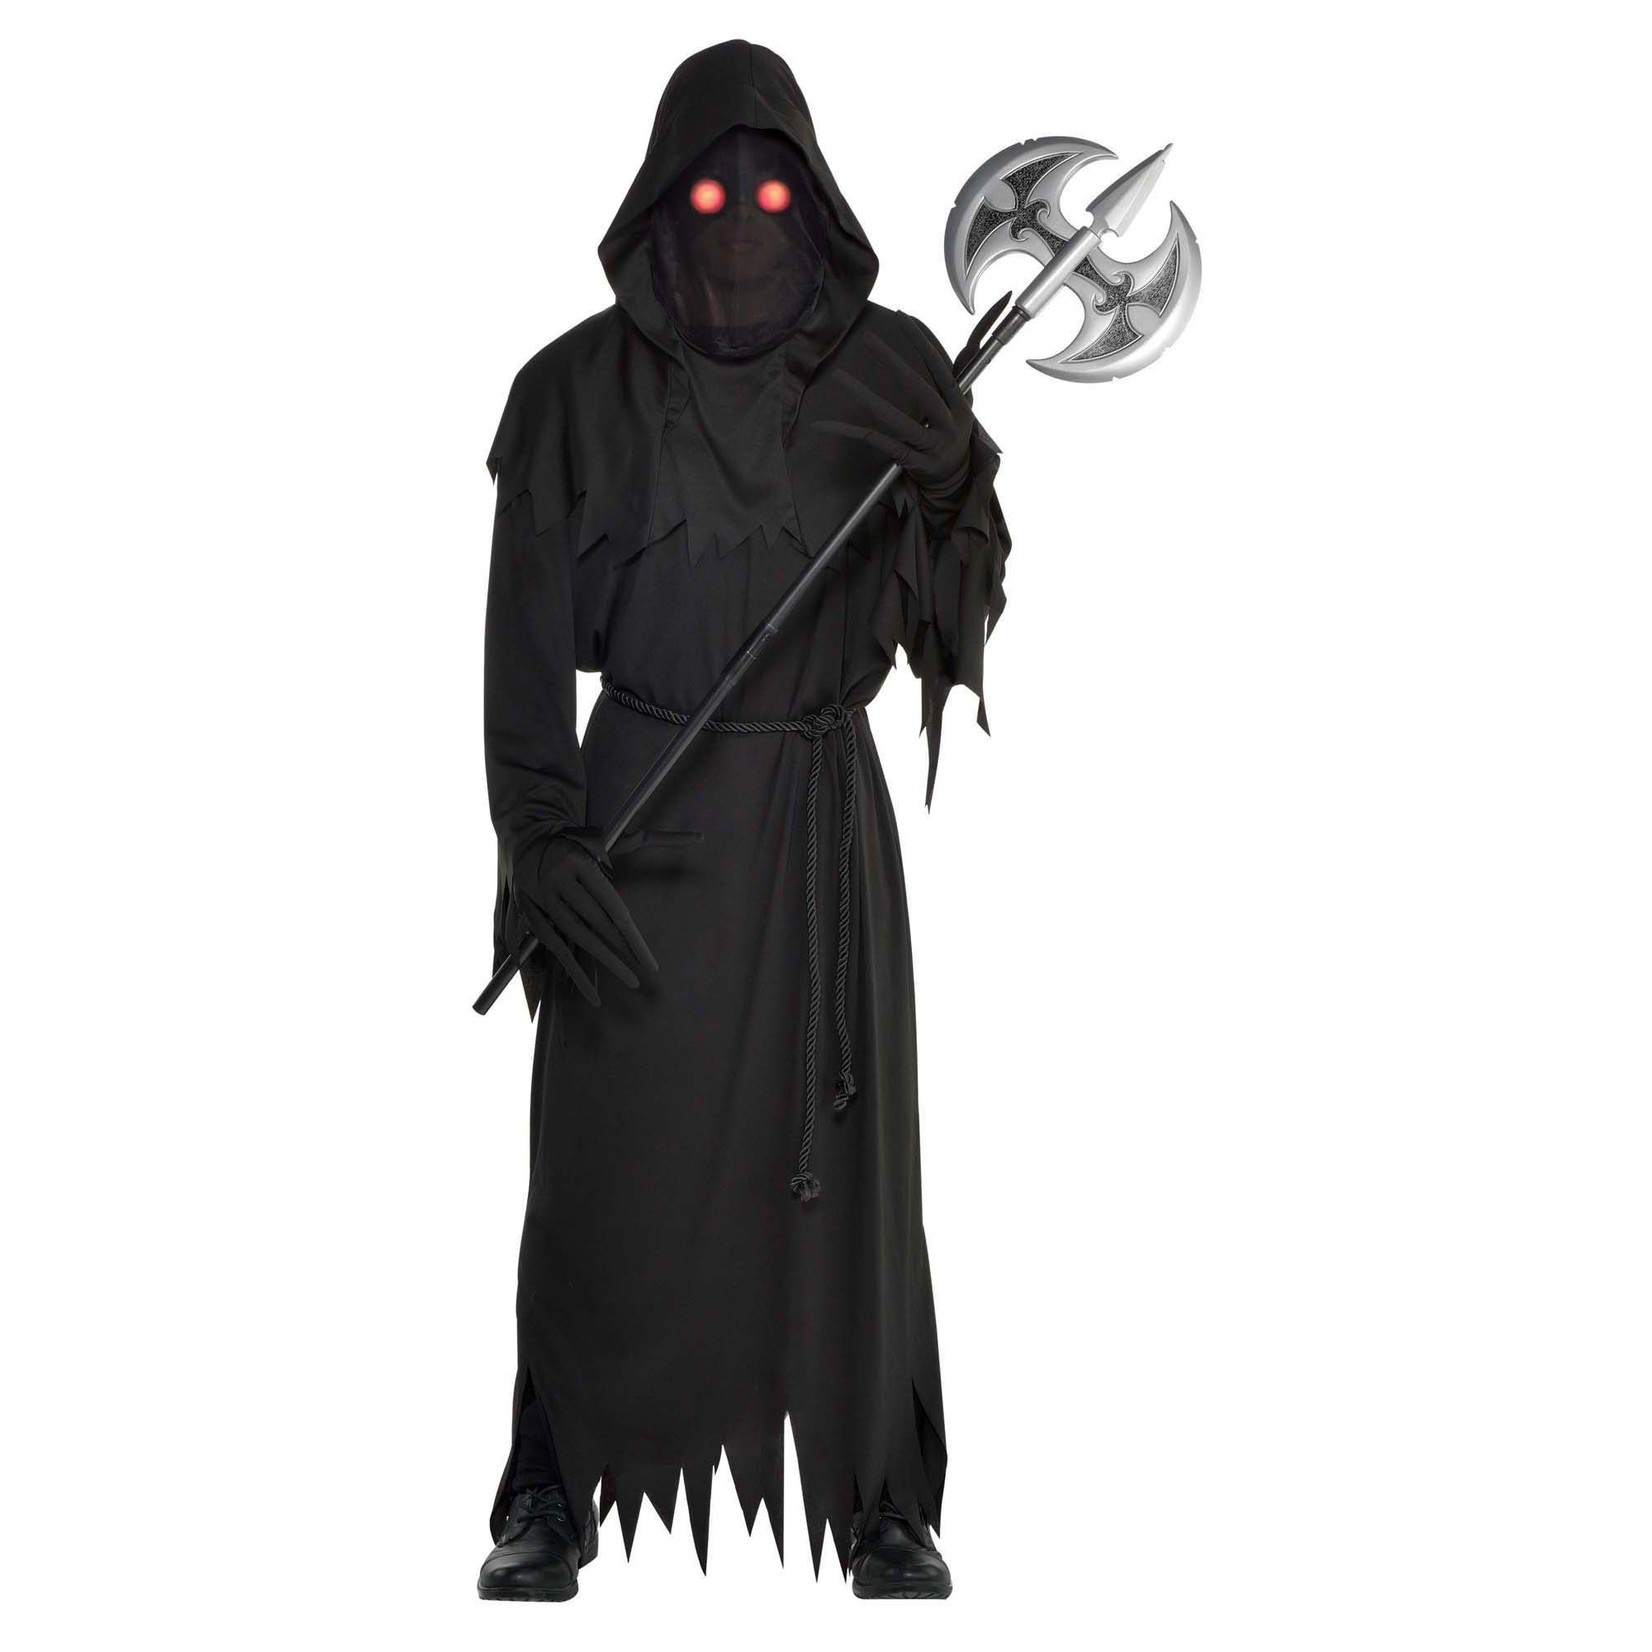 Adult Costume - Glaring Reaper - Standard